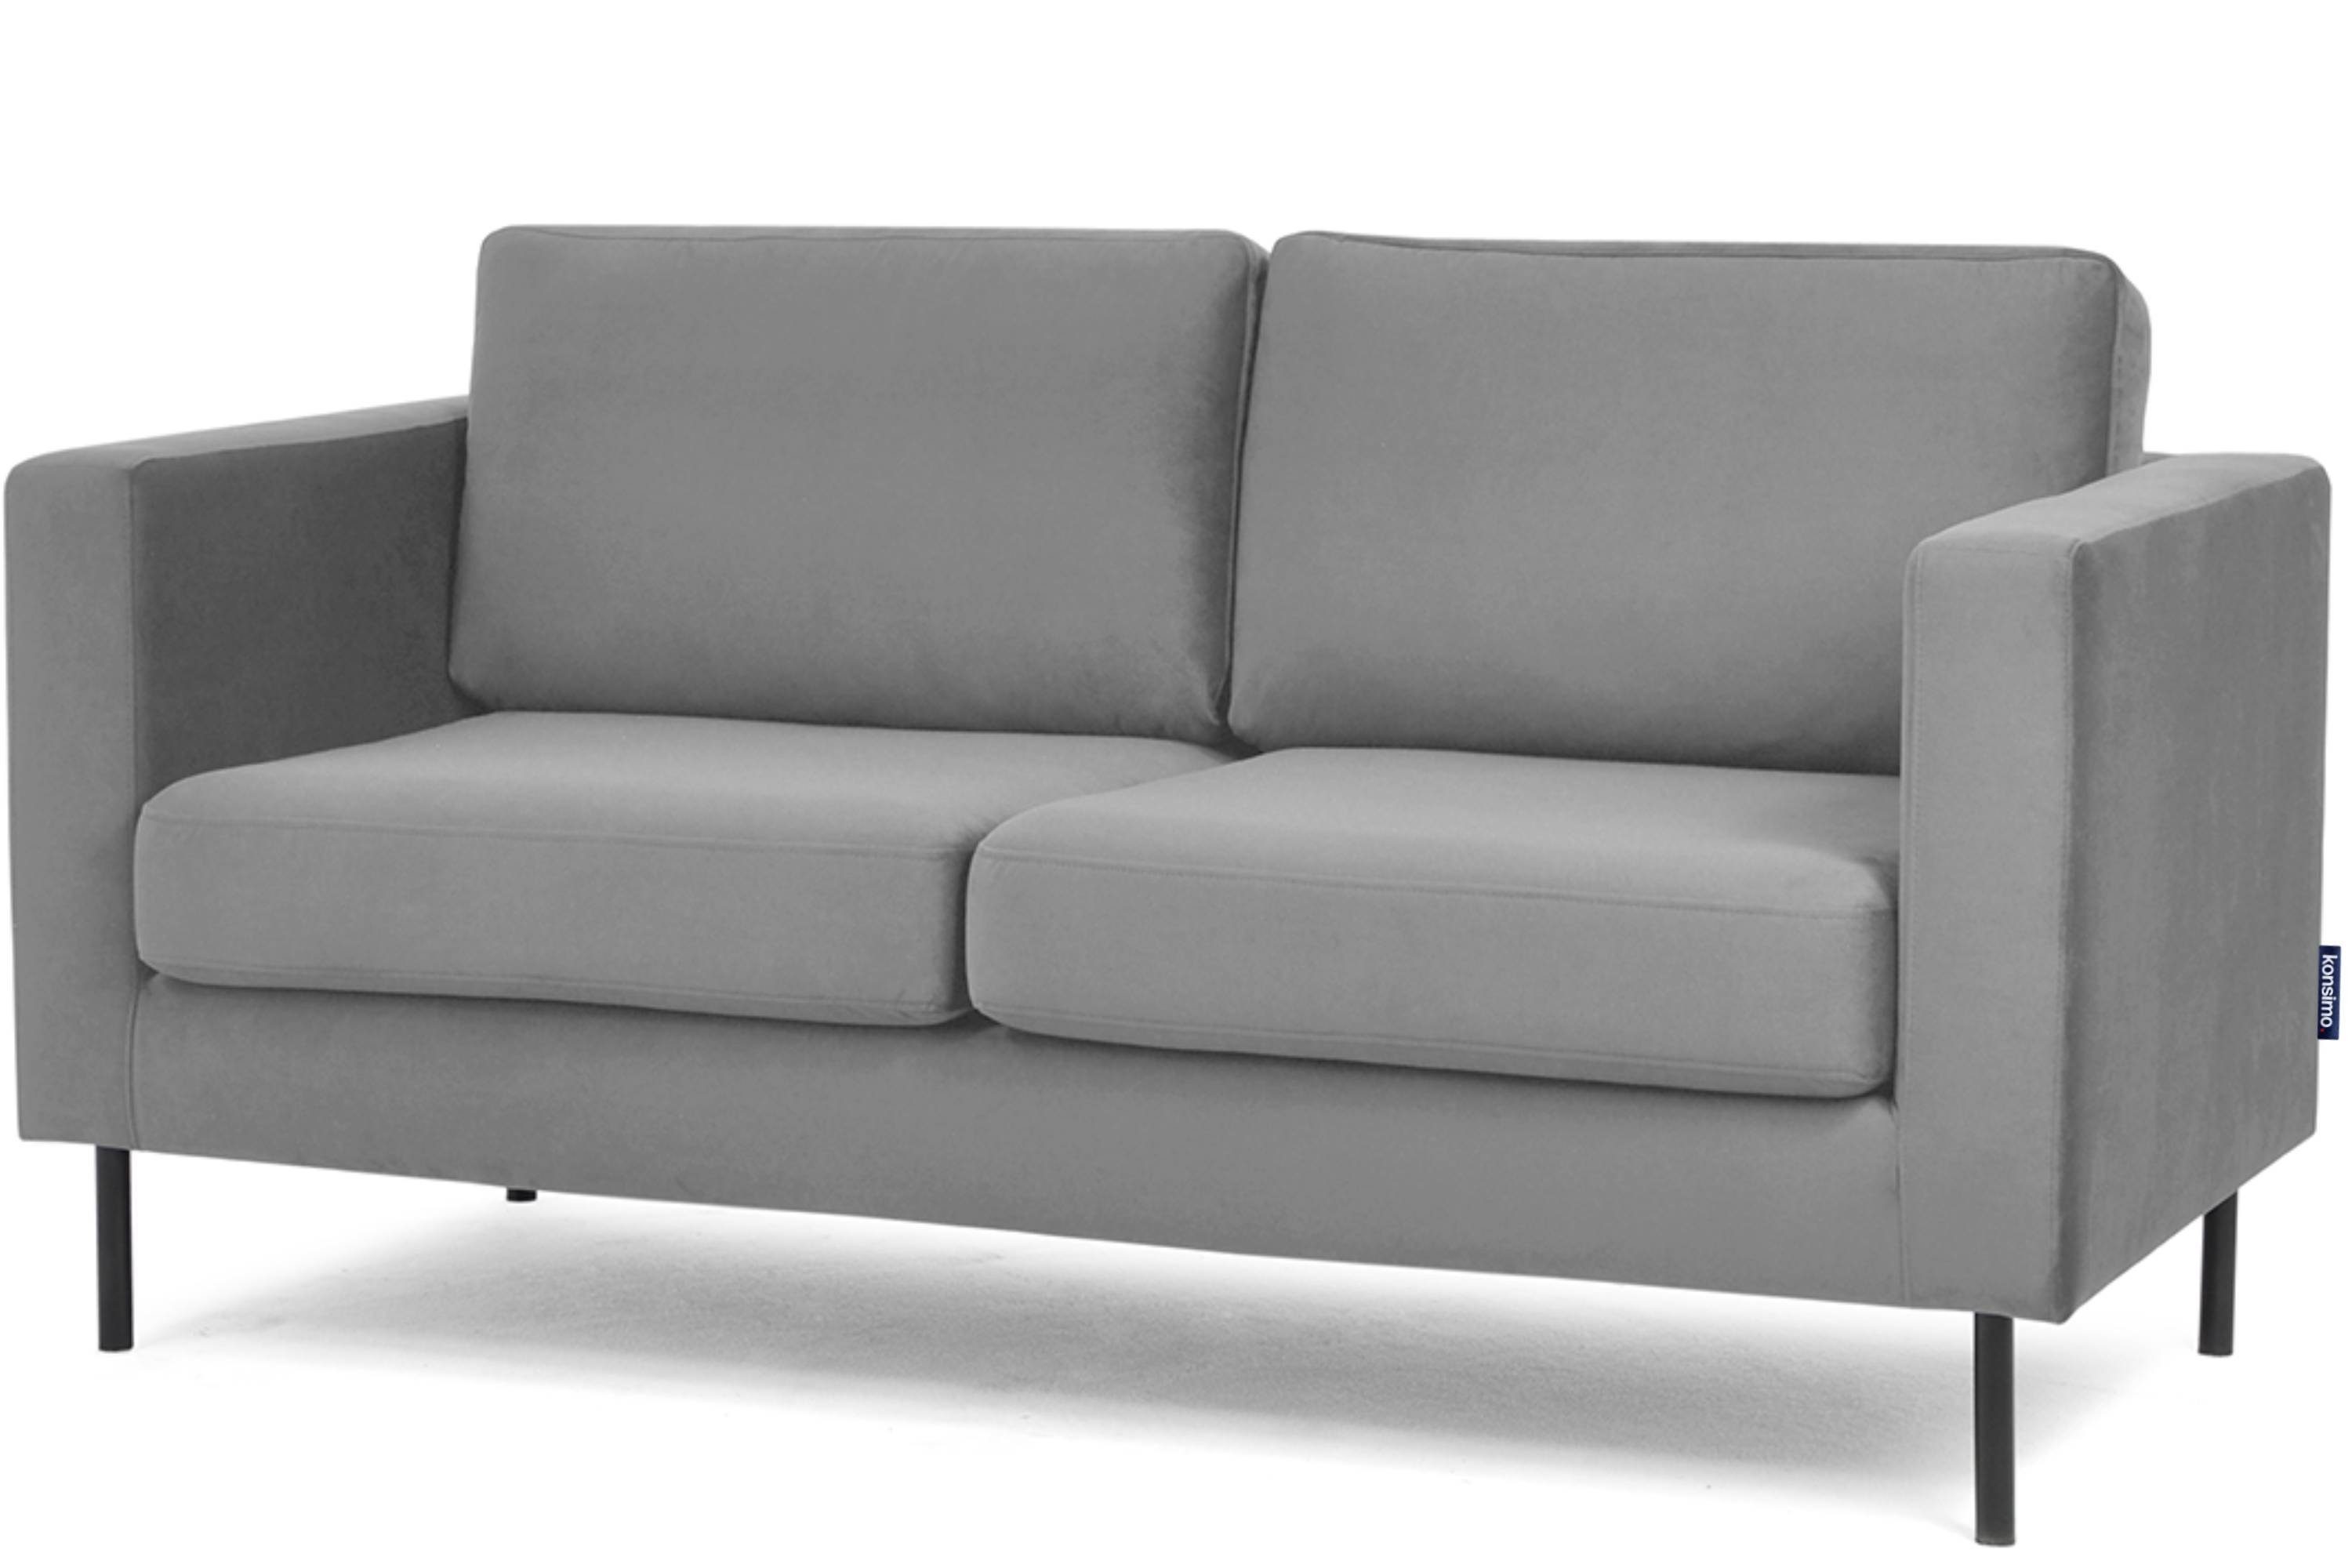 Konsimo 2-Sitzer TOZZI Sofa 2 Personen, | Beine, grau | grau grau Design universelles hohe